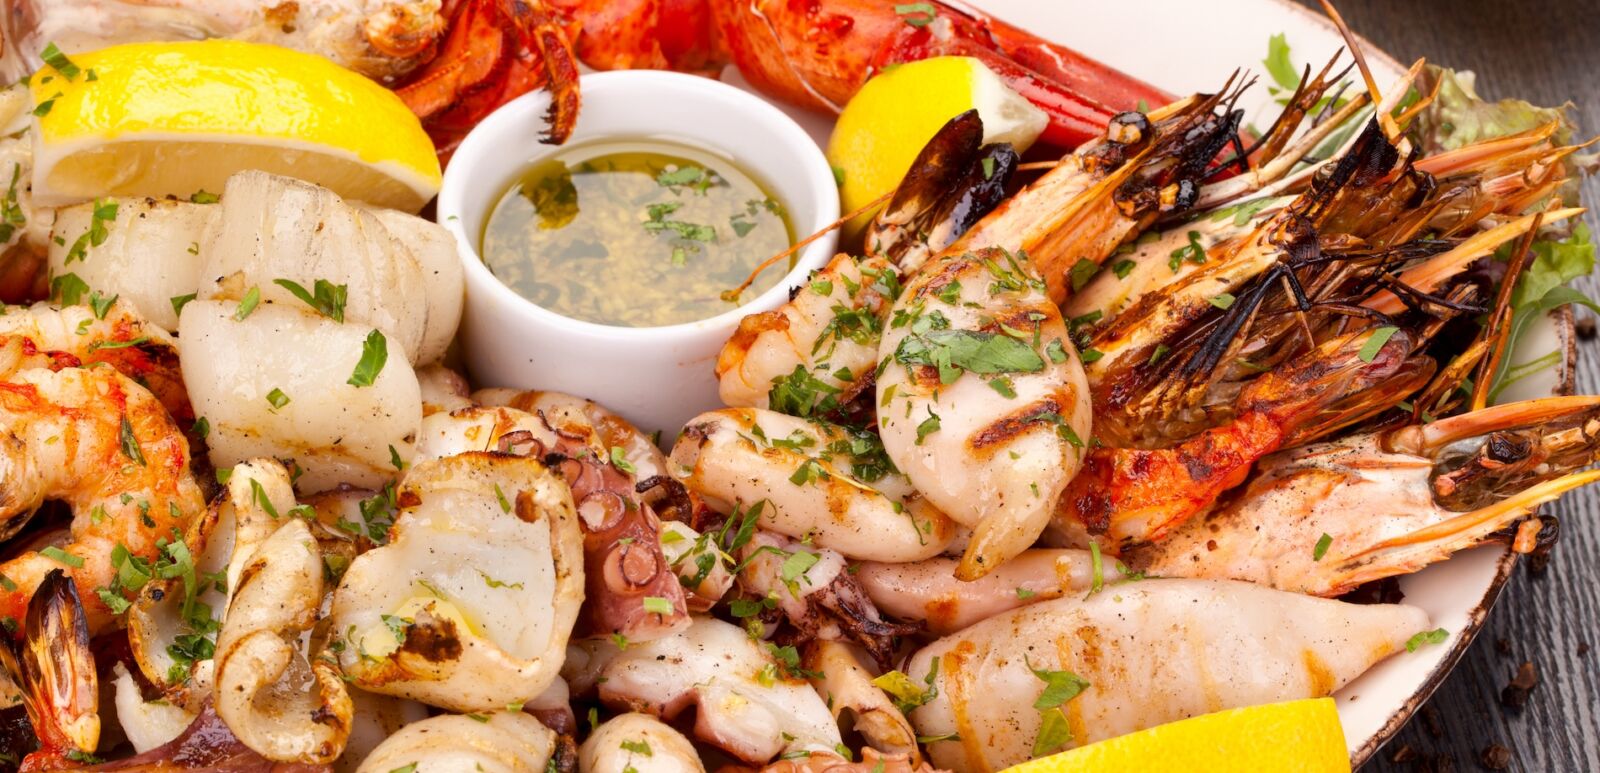 Seafood platter. Photo via Shutterstock.